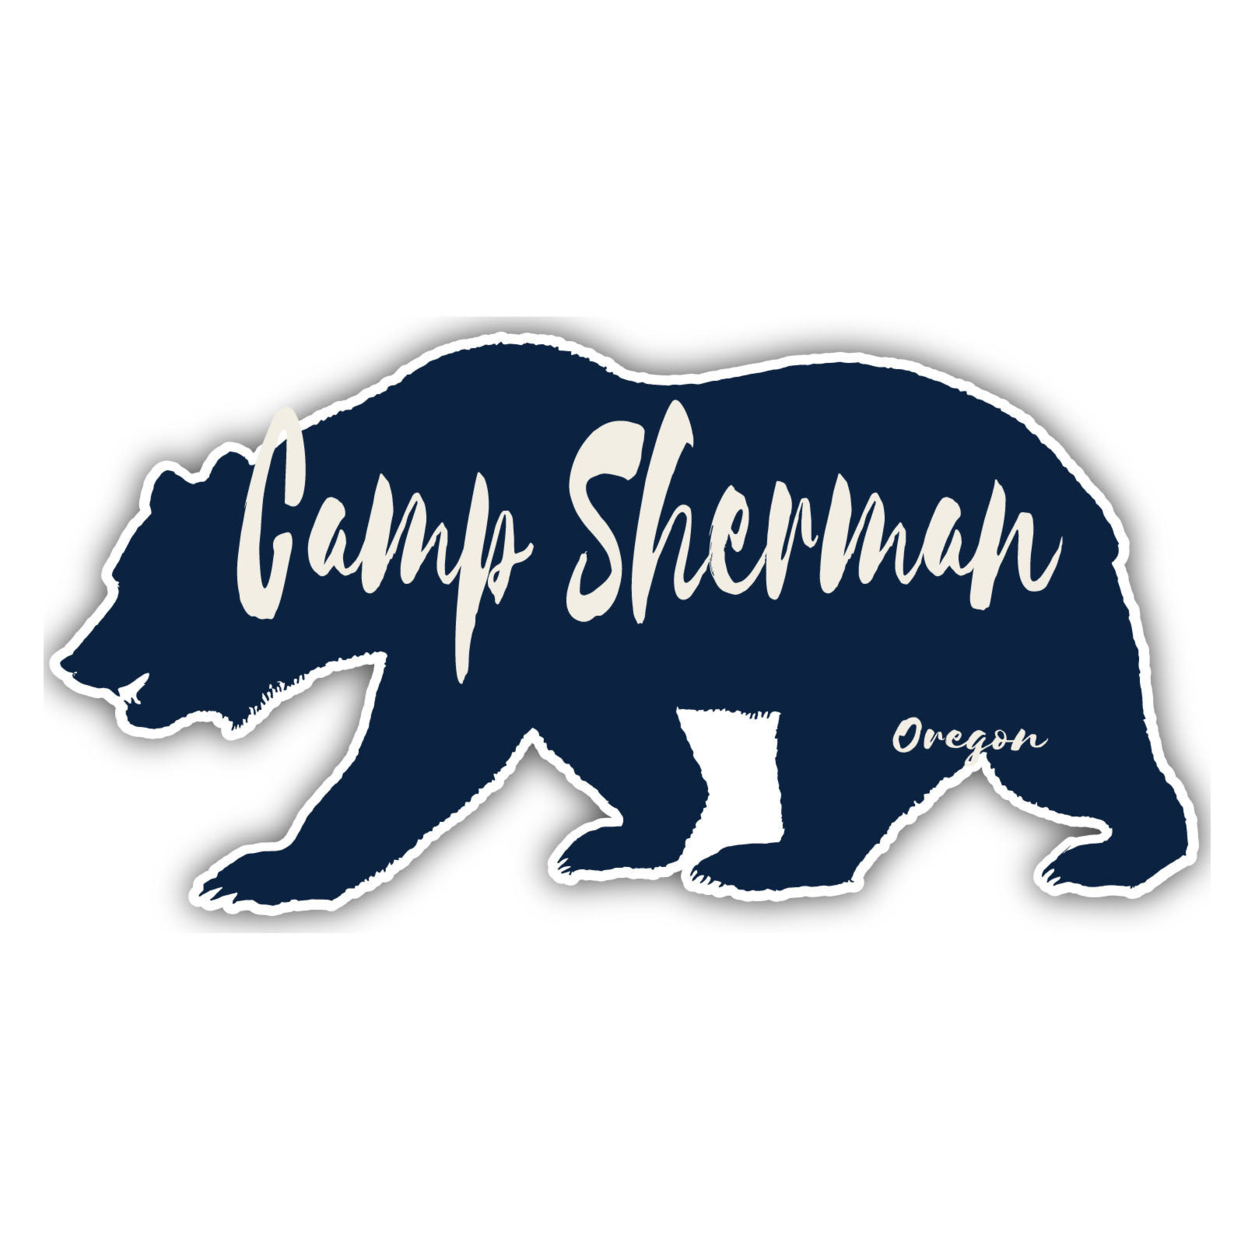 Camp Sherman Oregon Souvenir Decorative Stickers (Choose Theme And Size) - 4-Pack, 12-Inch, Bear